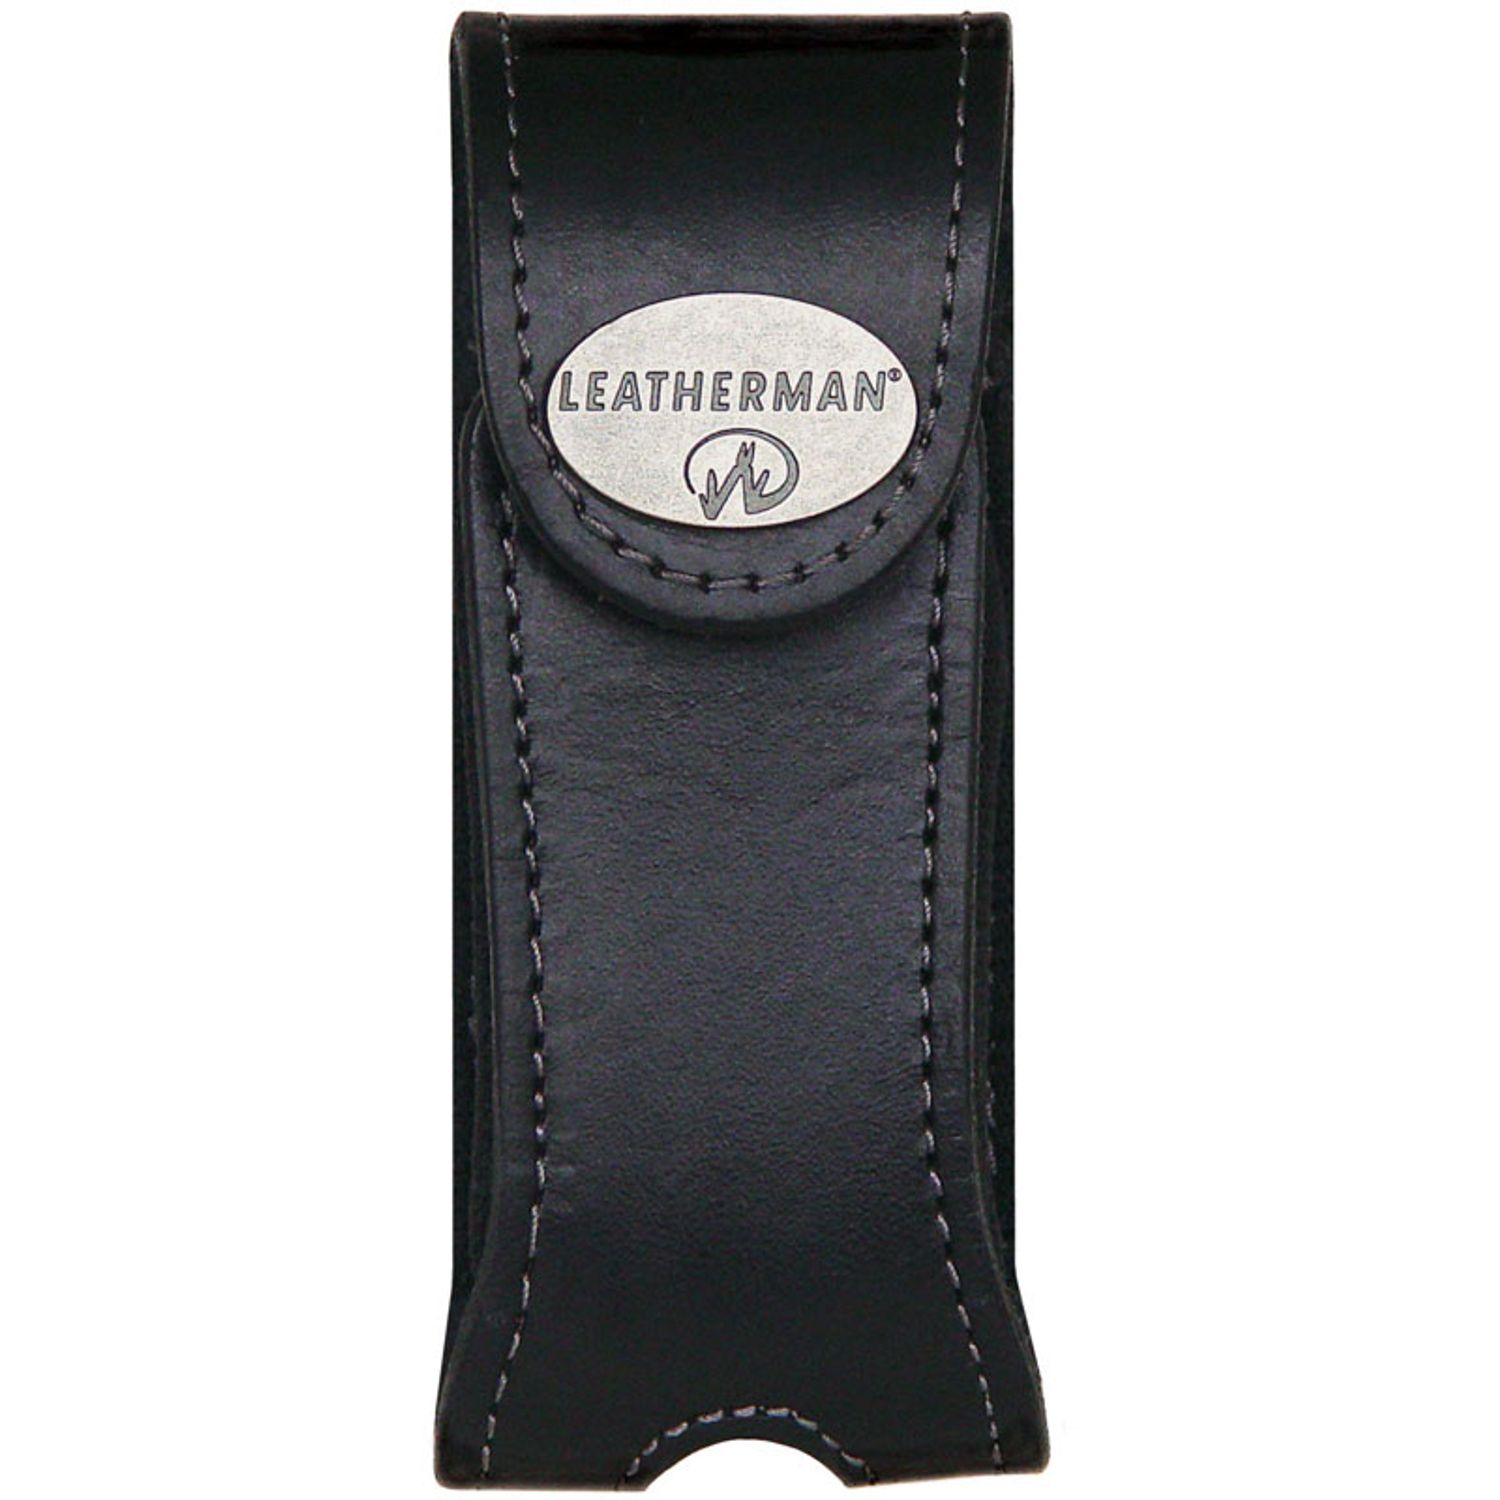 Leatherman Premium Leather Sheath for Leatherman Charge Multi-Tool